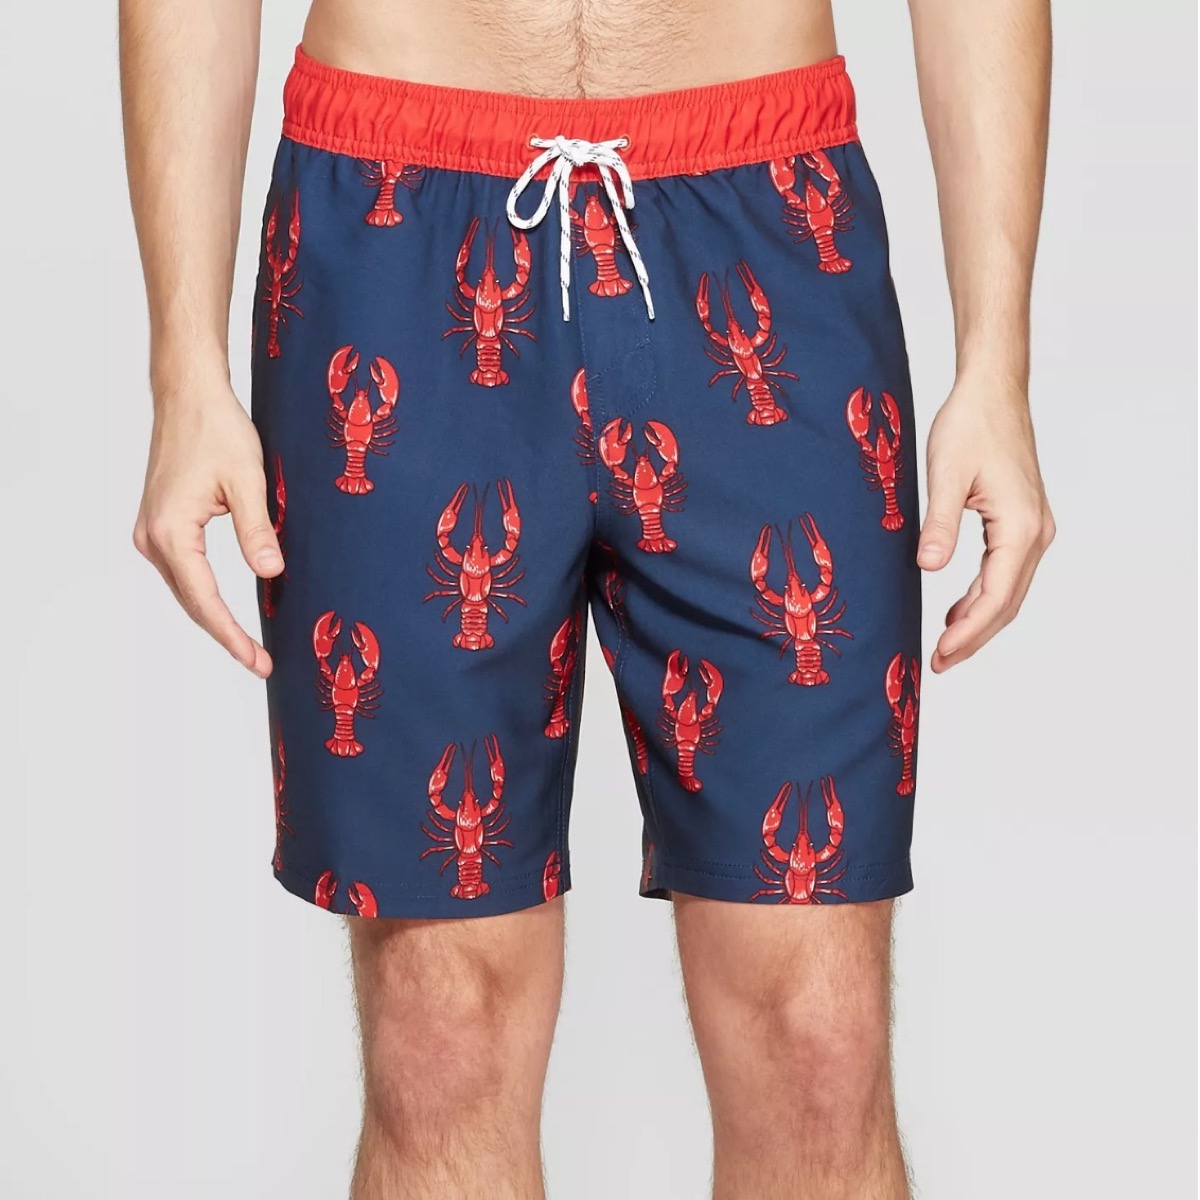 lobster swim trunks, cheap swimsuits